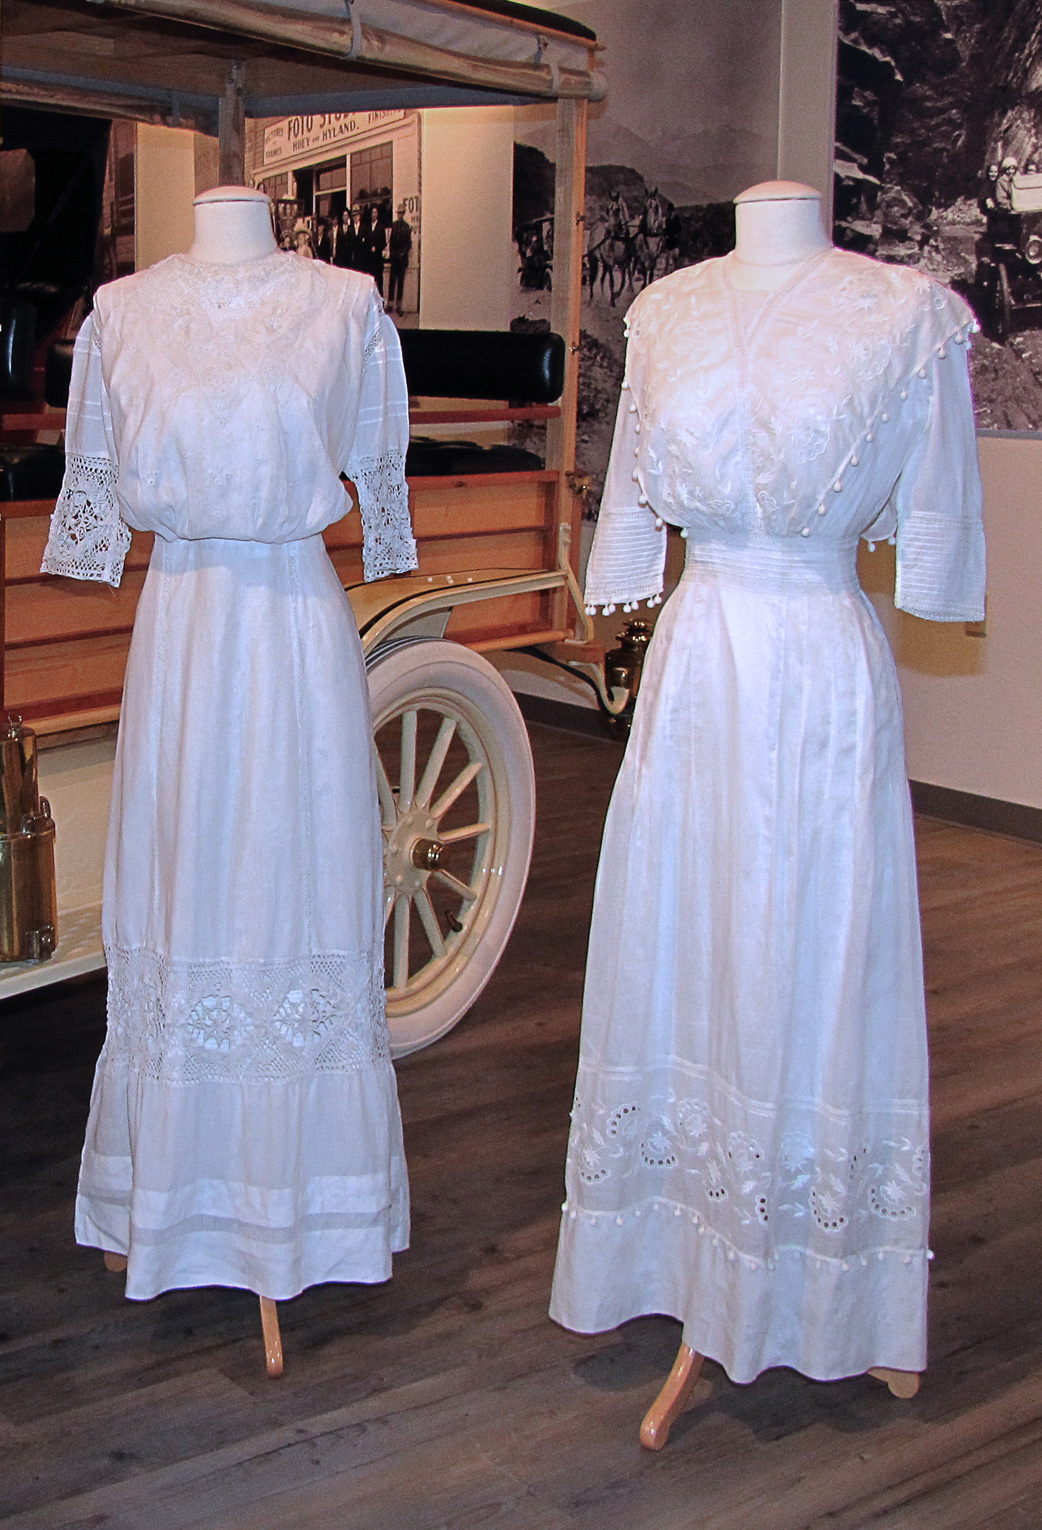 Fountainhead Antique Auto Museum: Lingerie Dresses of the